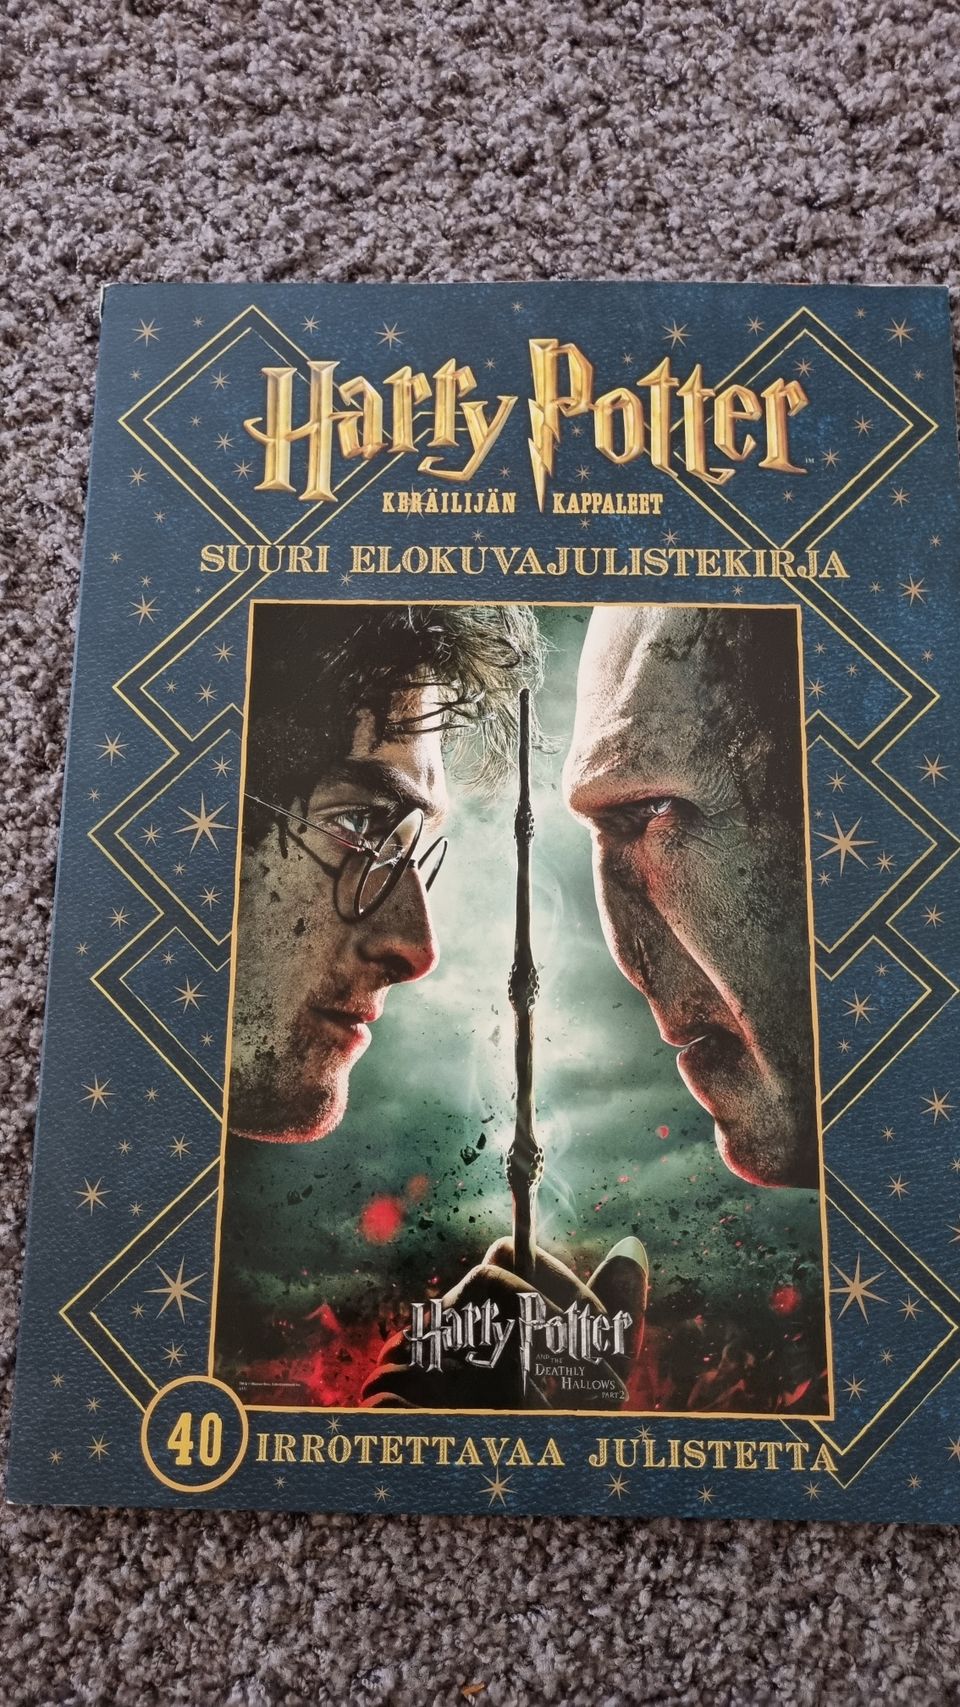 Harry Potter julistekirja